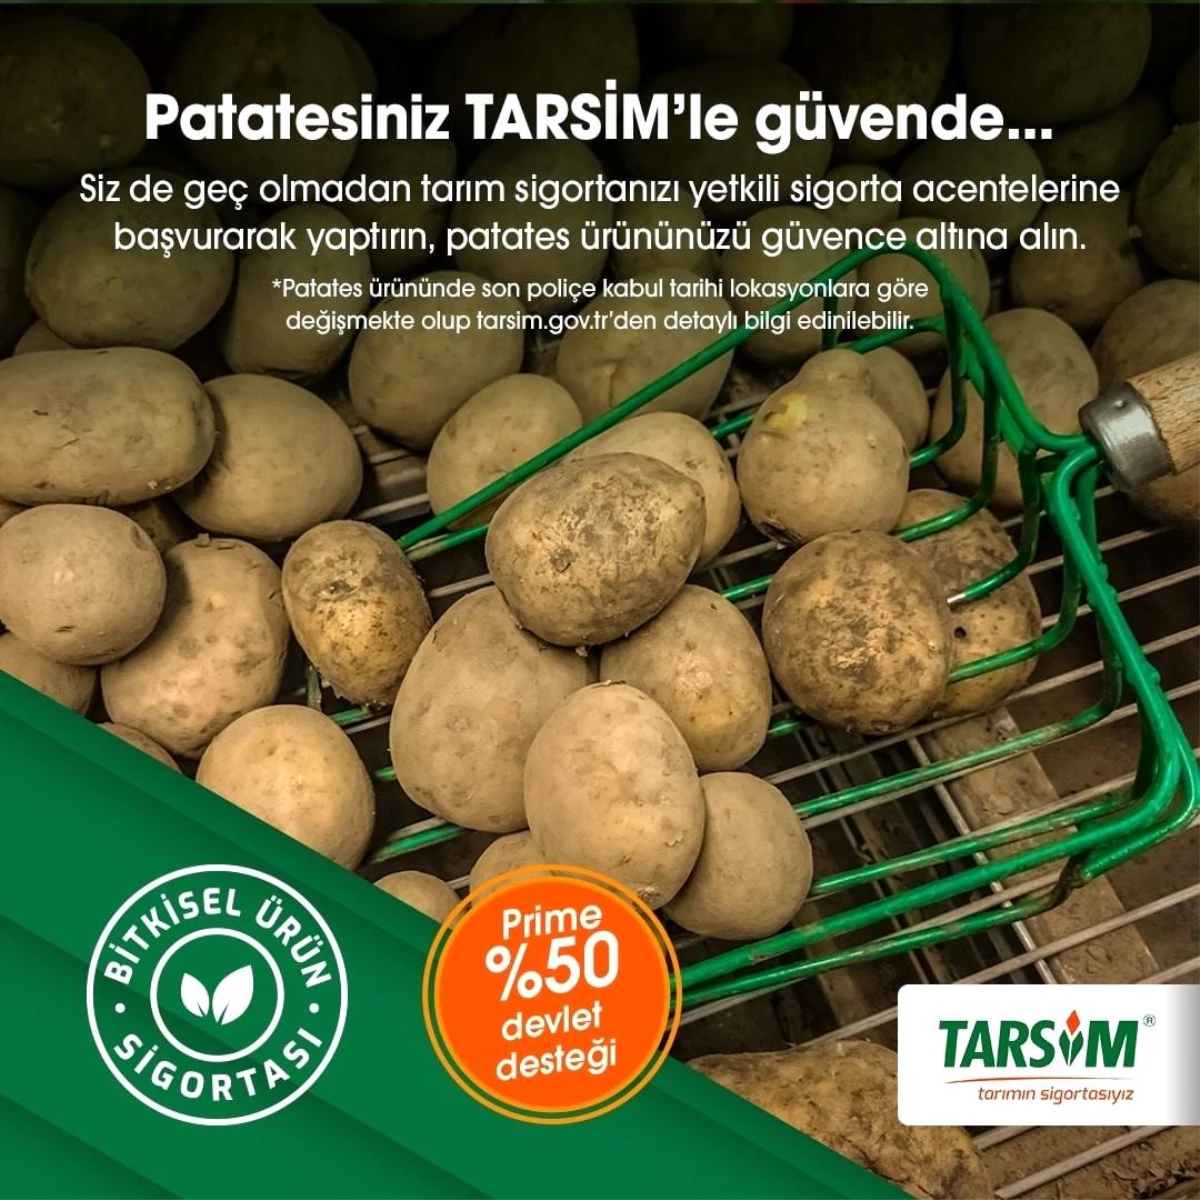 TARSİM: "Patates ürününüz güvende"